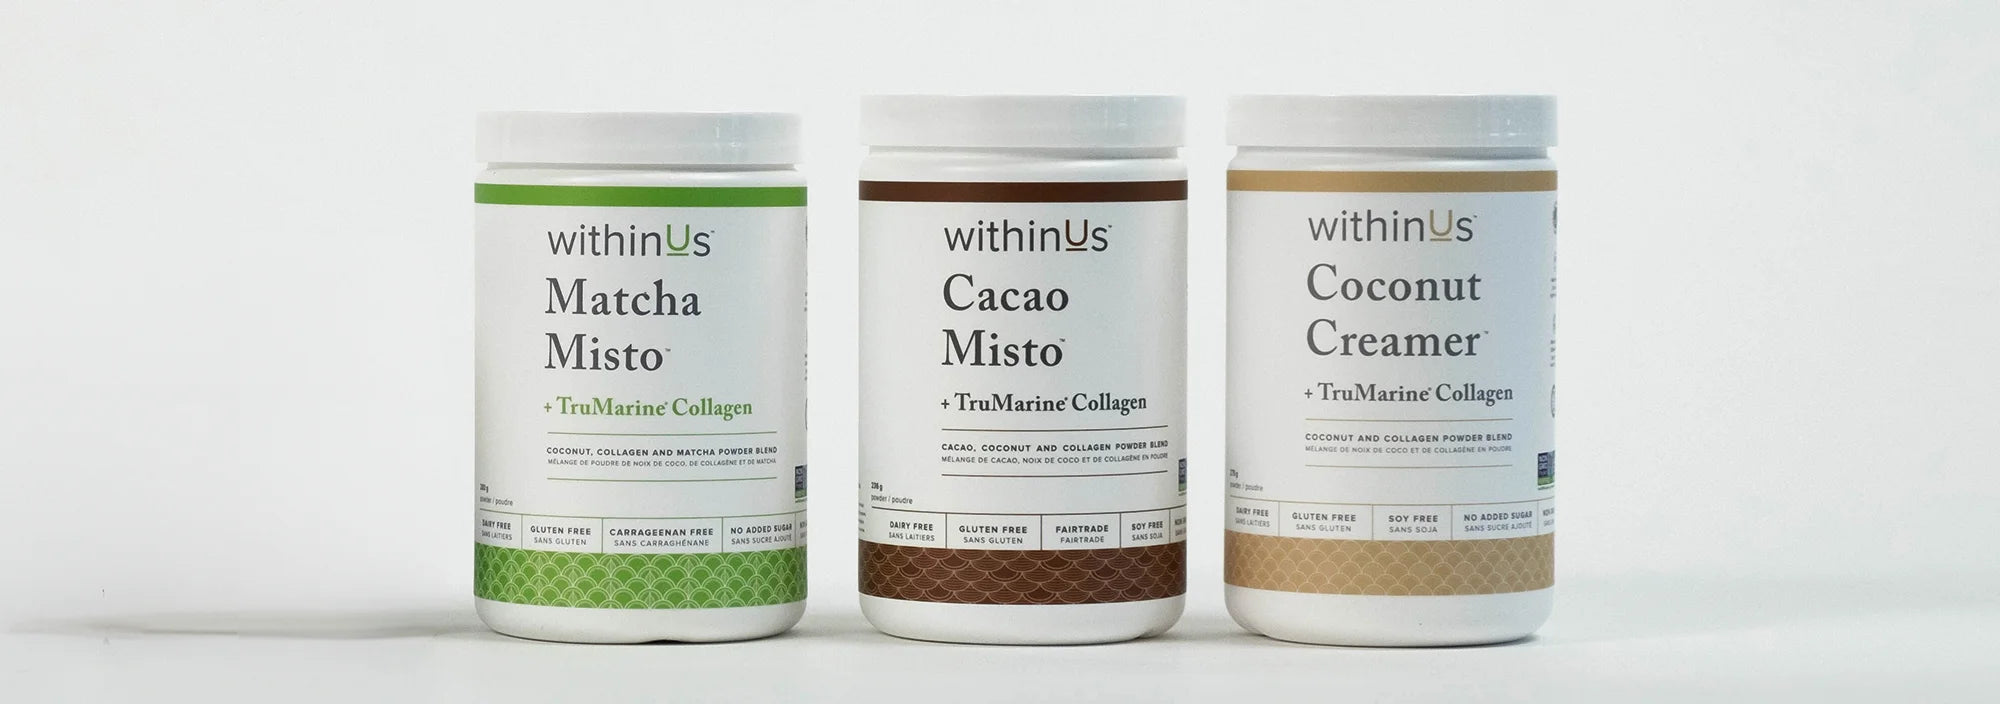 使用 WithinUs +TruMarine 胶原蛋白产品提升健康水平